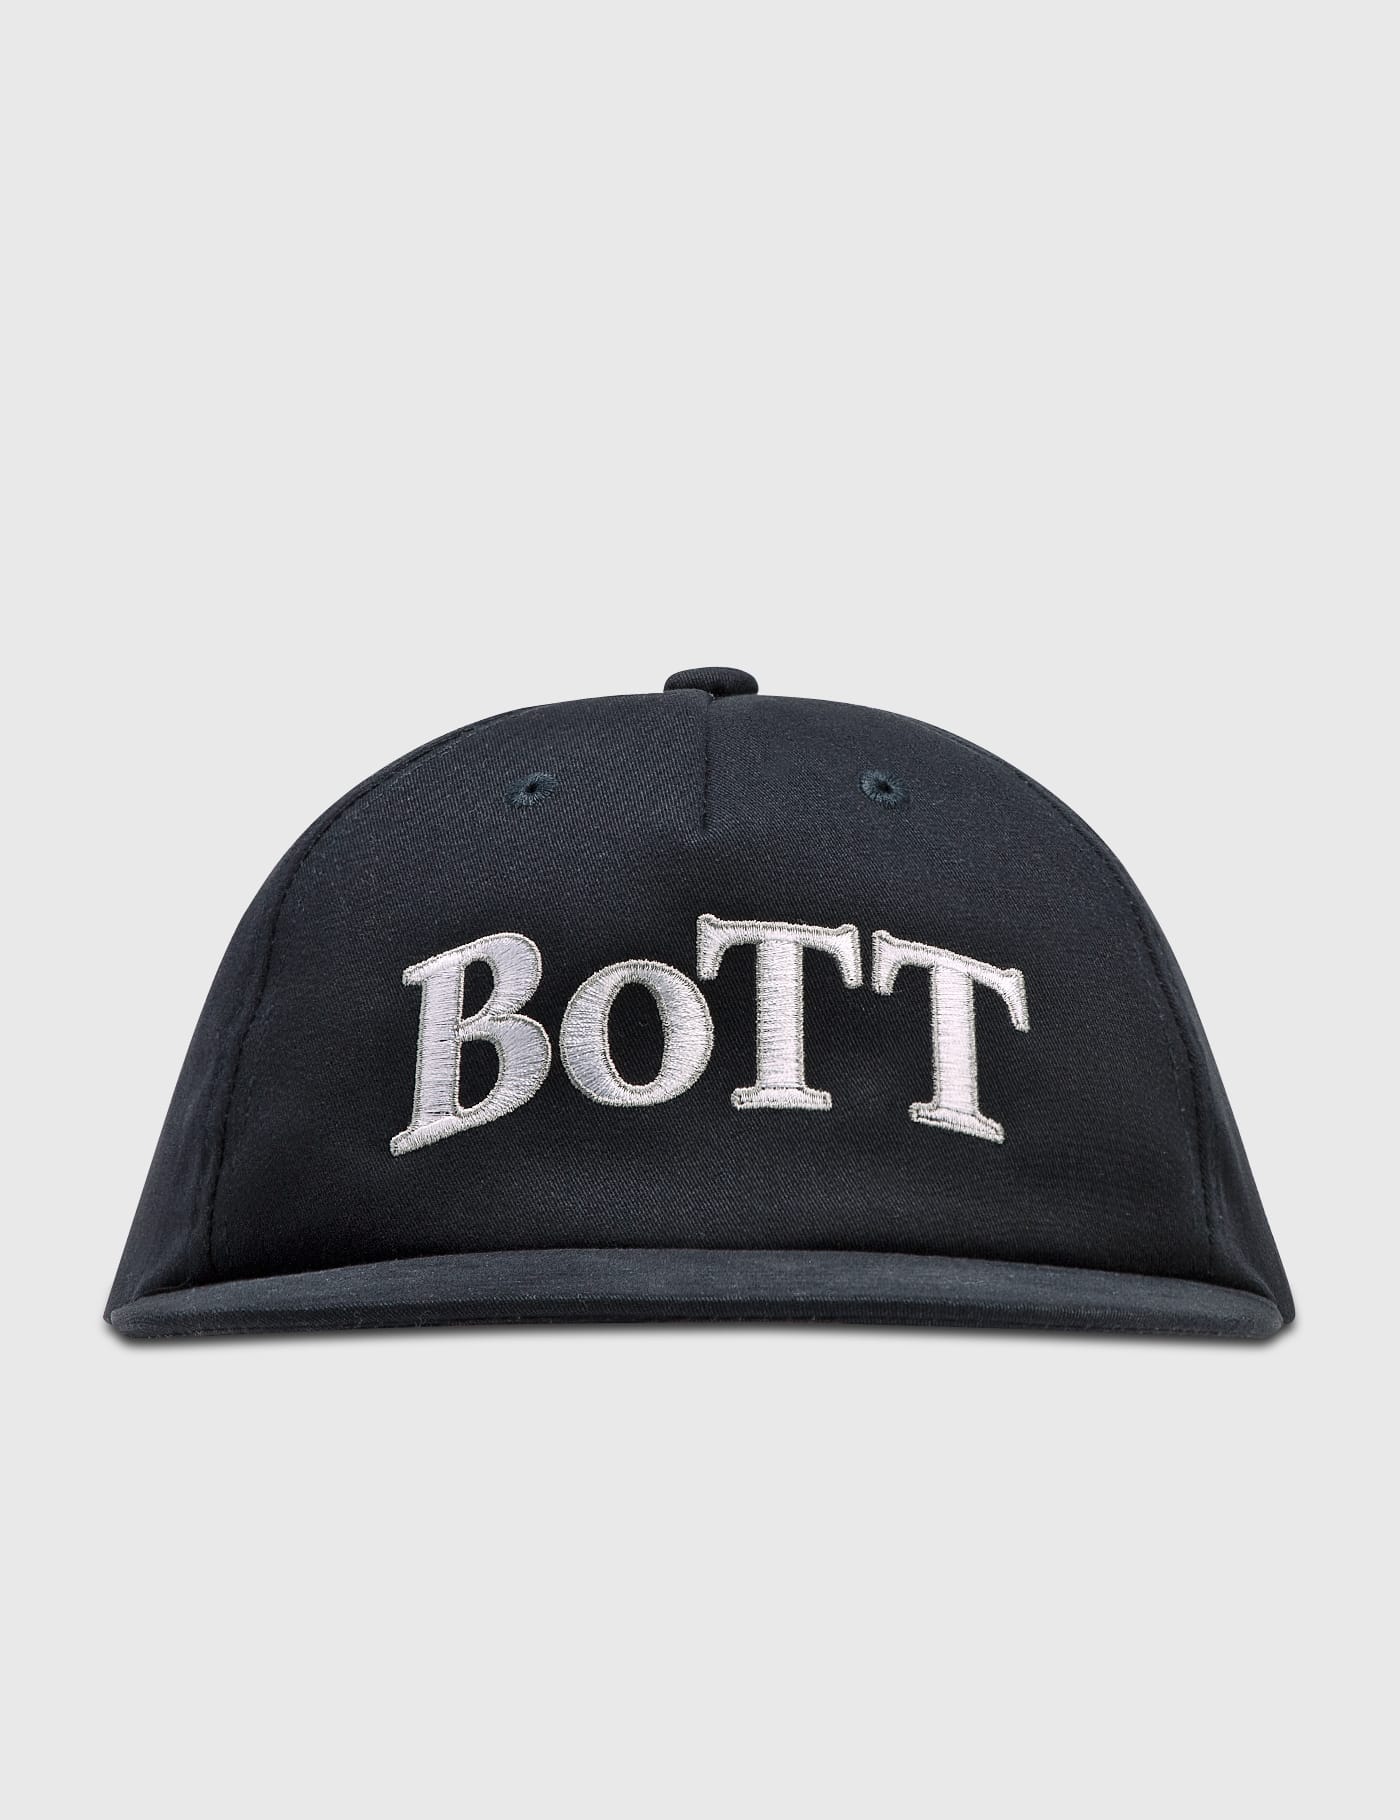 BoTT - OG LOGO 5 Panel Cap | HBX - Globally Curated Fashion and